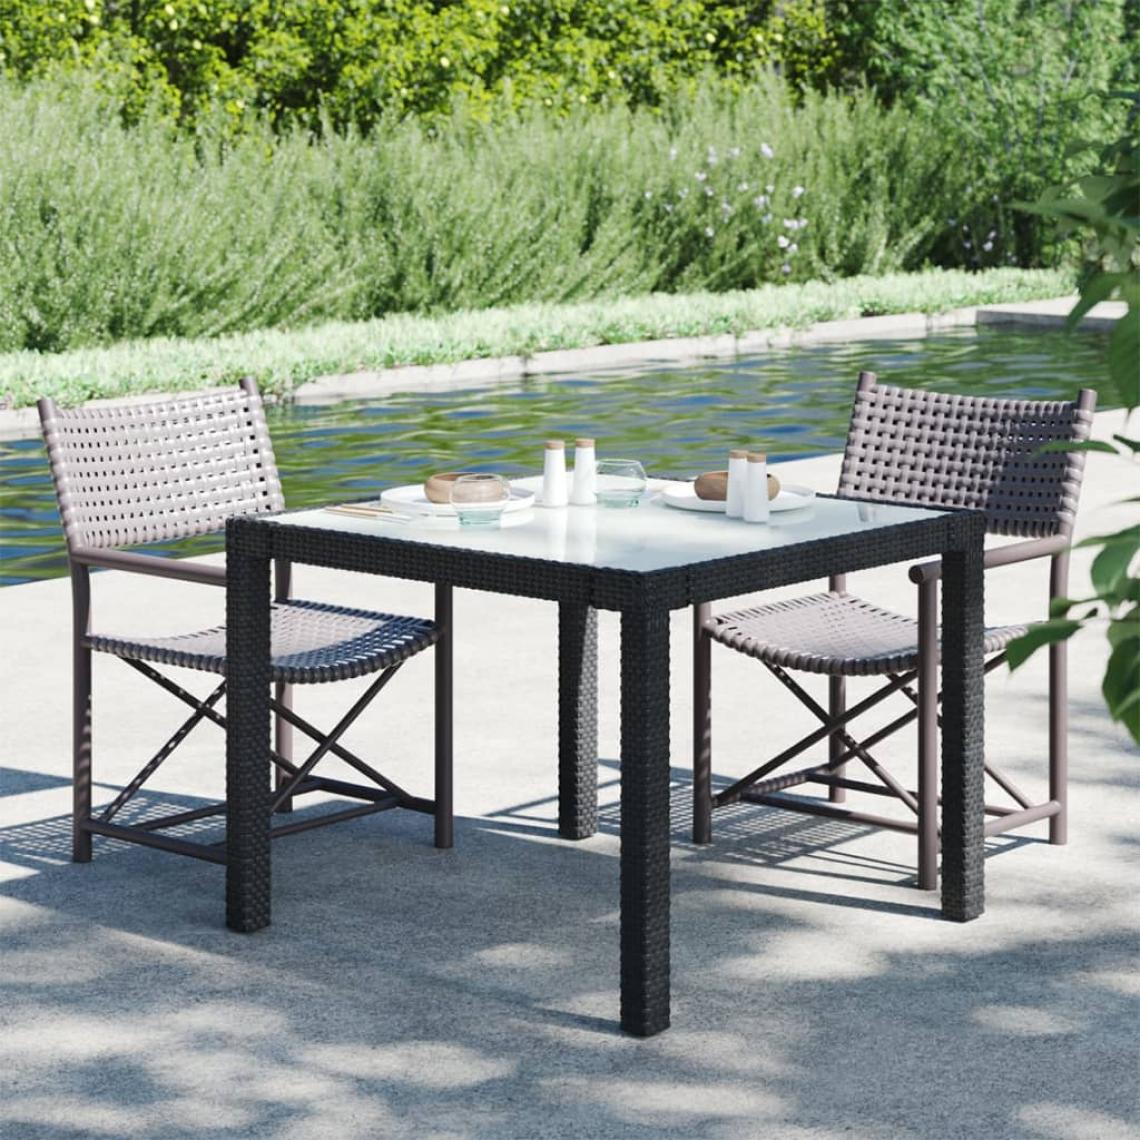 Vidaxl - vidaXL Table de jardin 90x90x75 cm Verre trempé et résine tressée Noir - Tables de jardin